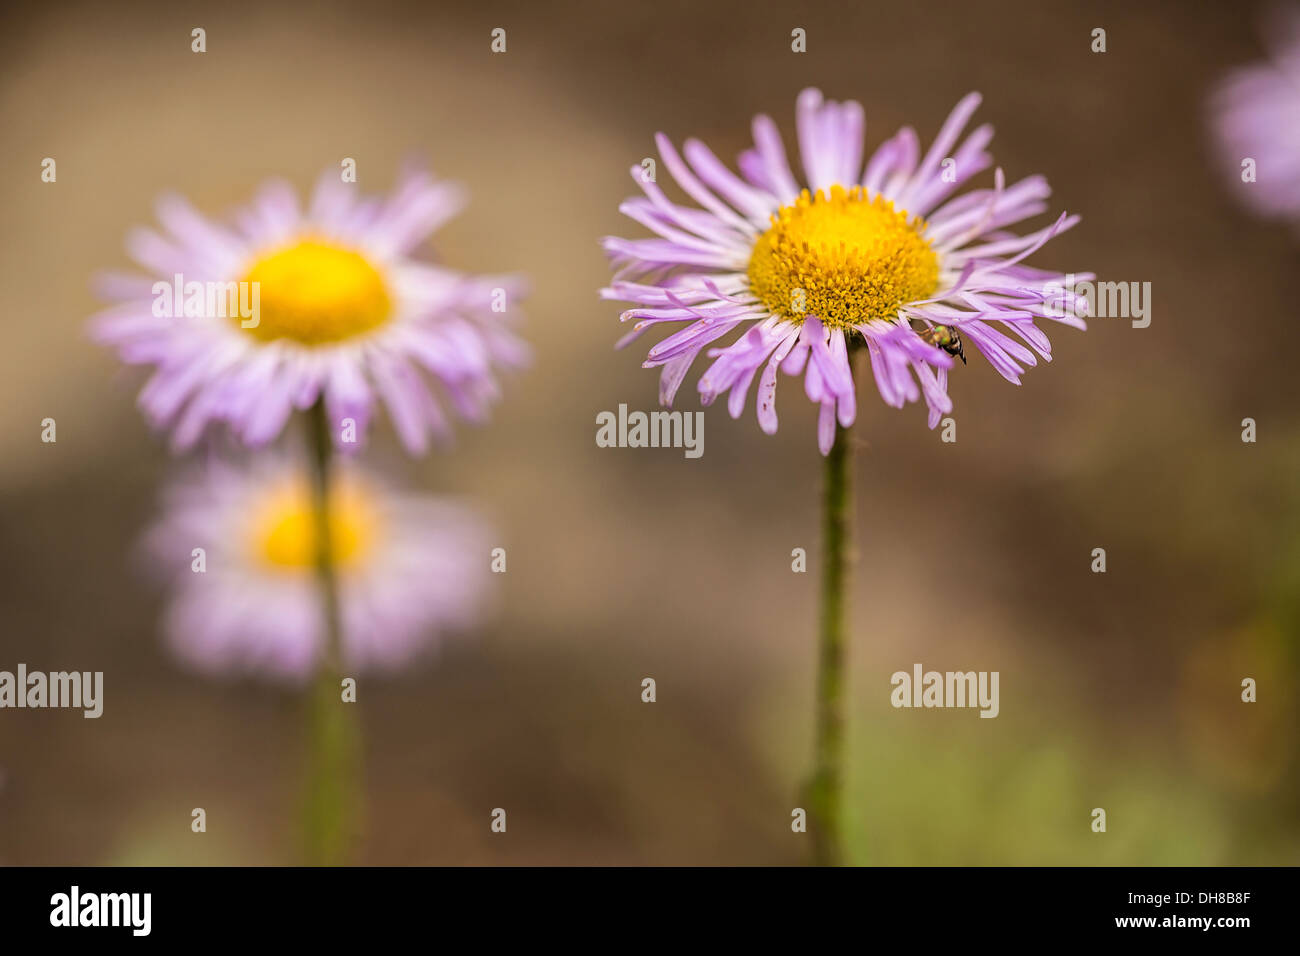 Fleabane, Aspen fleabane, Erigeron speciosus. Daisy like flowers with narrow, pink petals surrounding yellow centres. Stock Photo